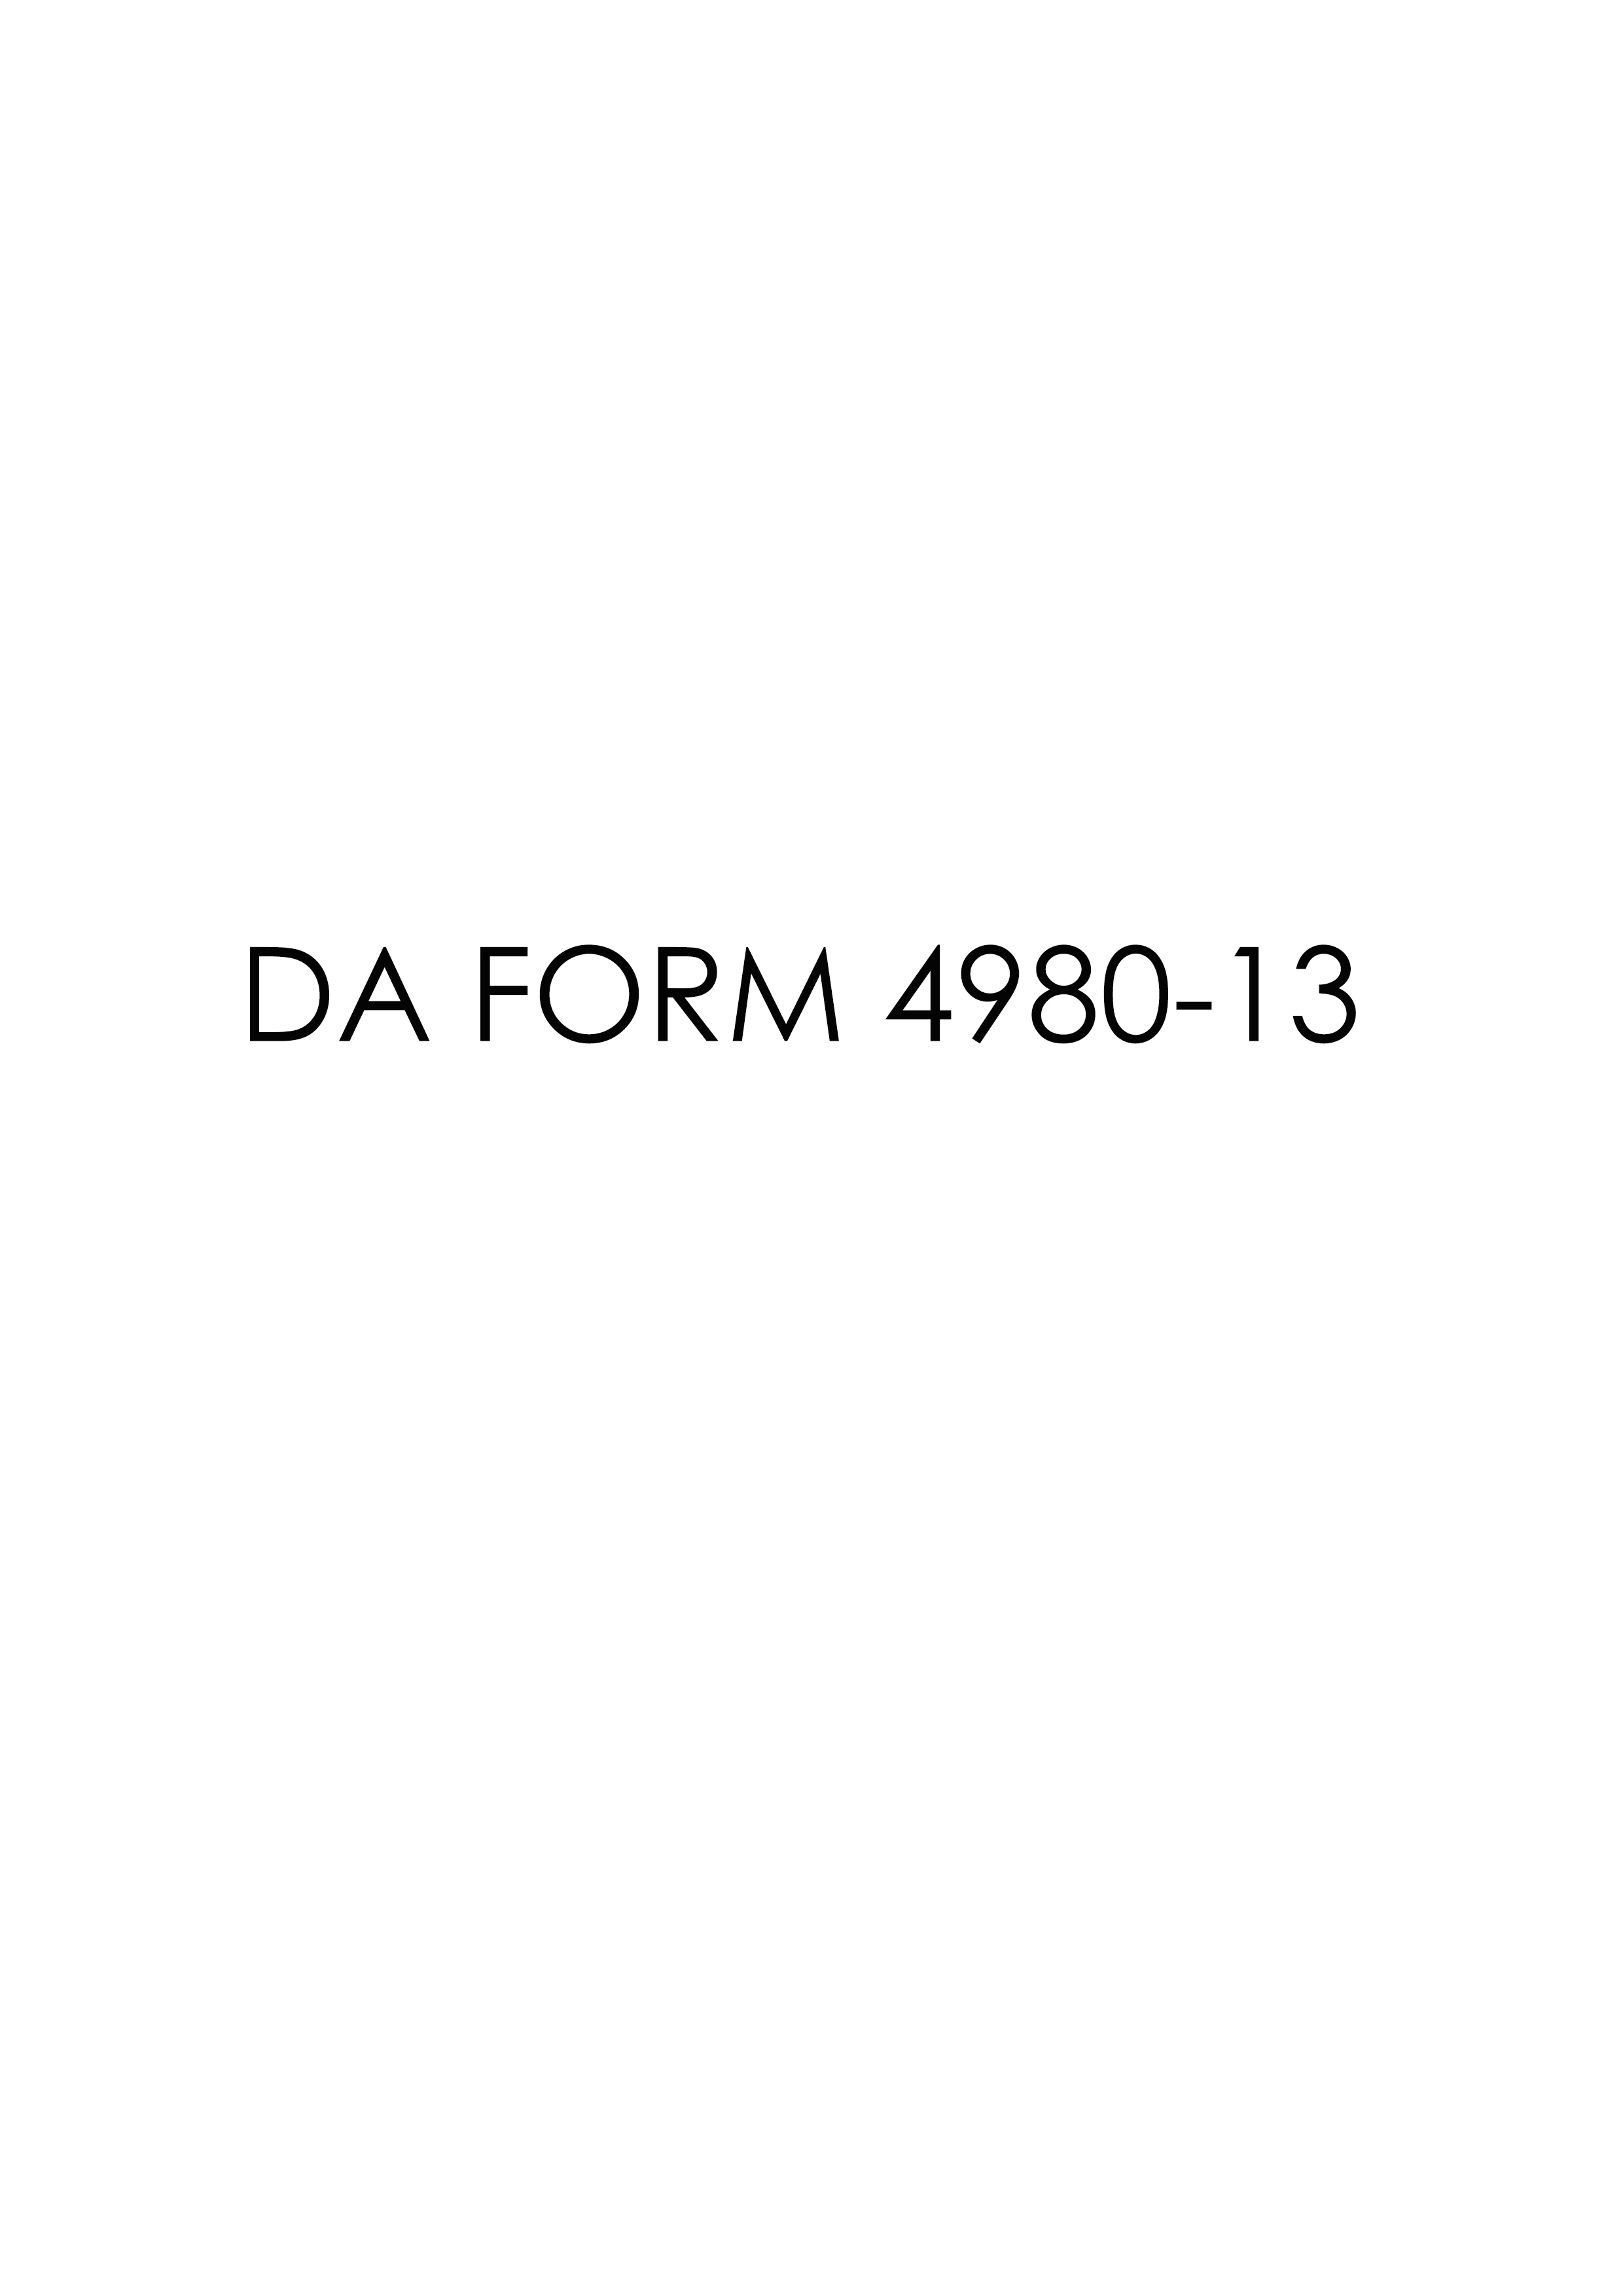 da Form 4980-13 fillable